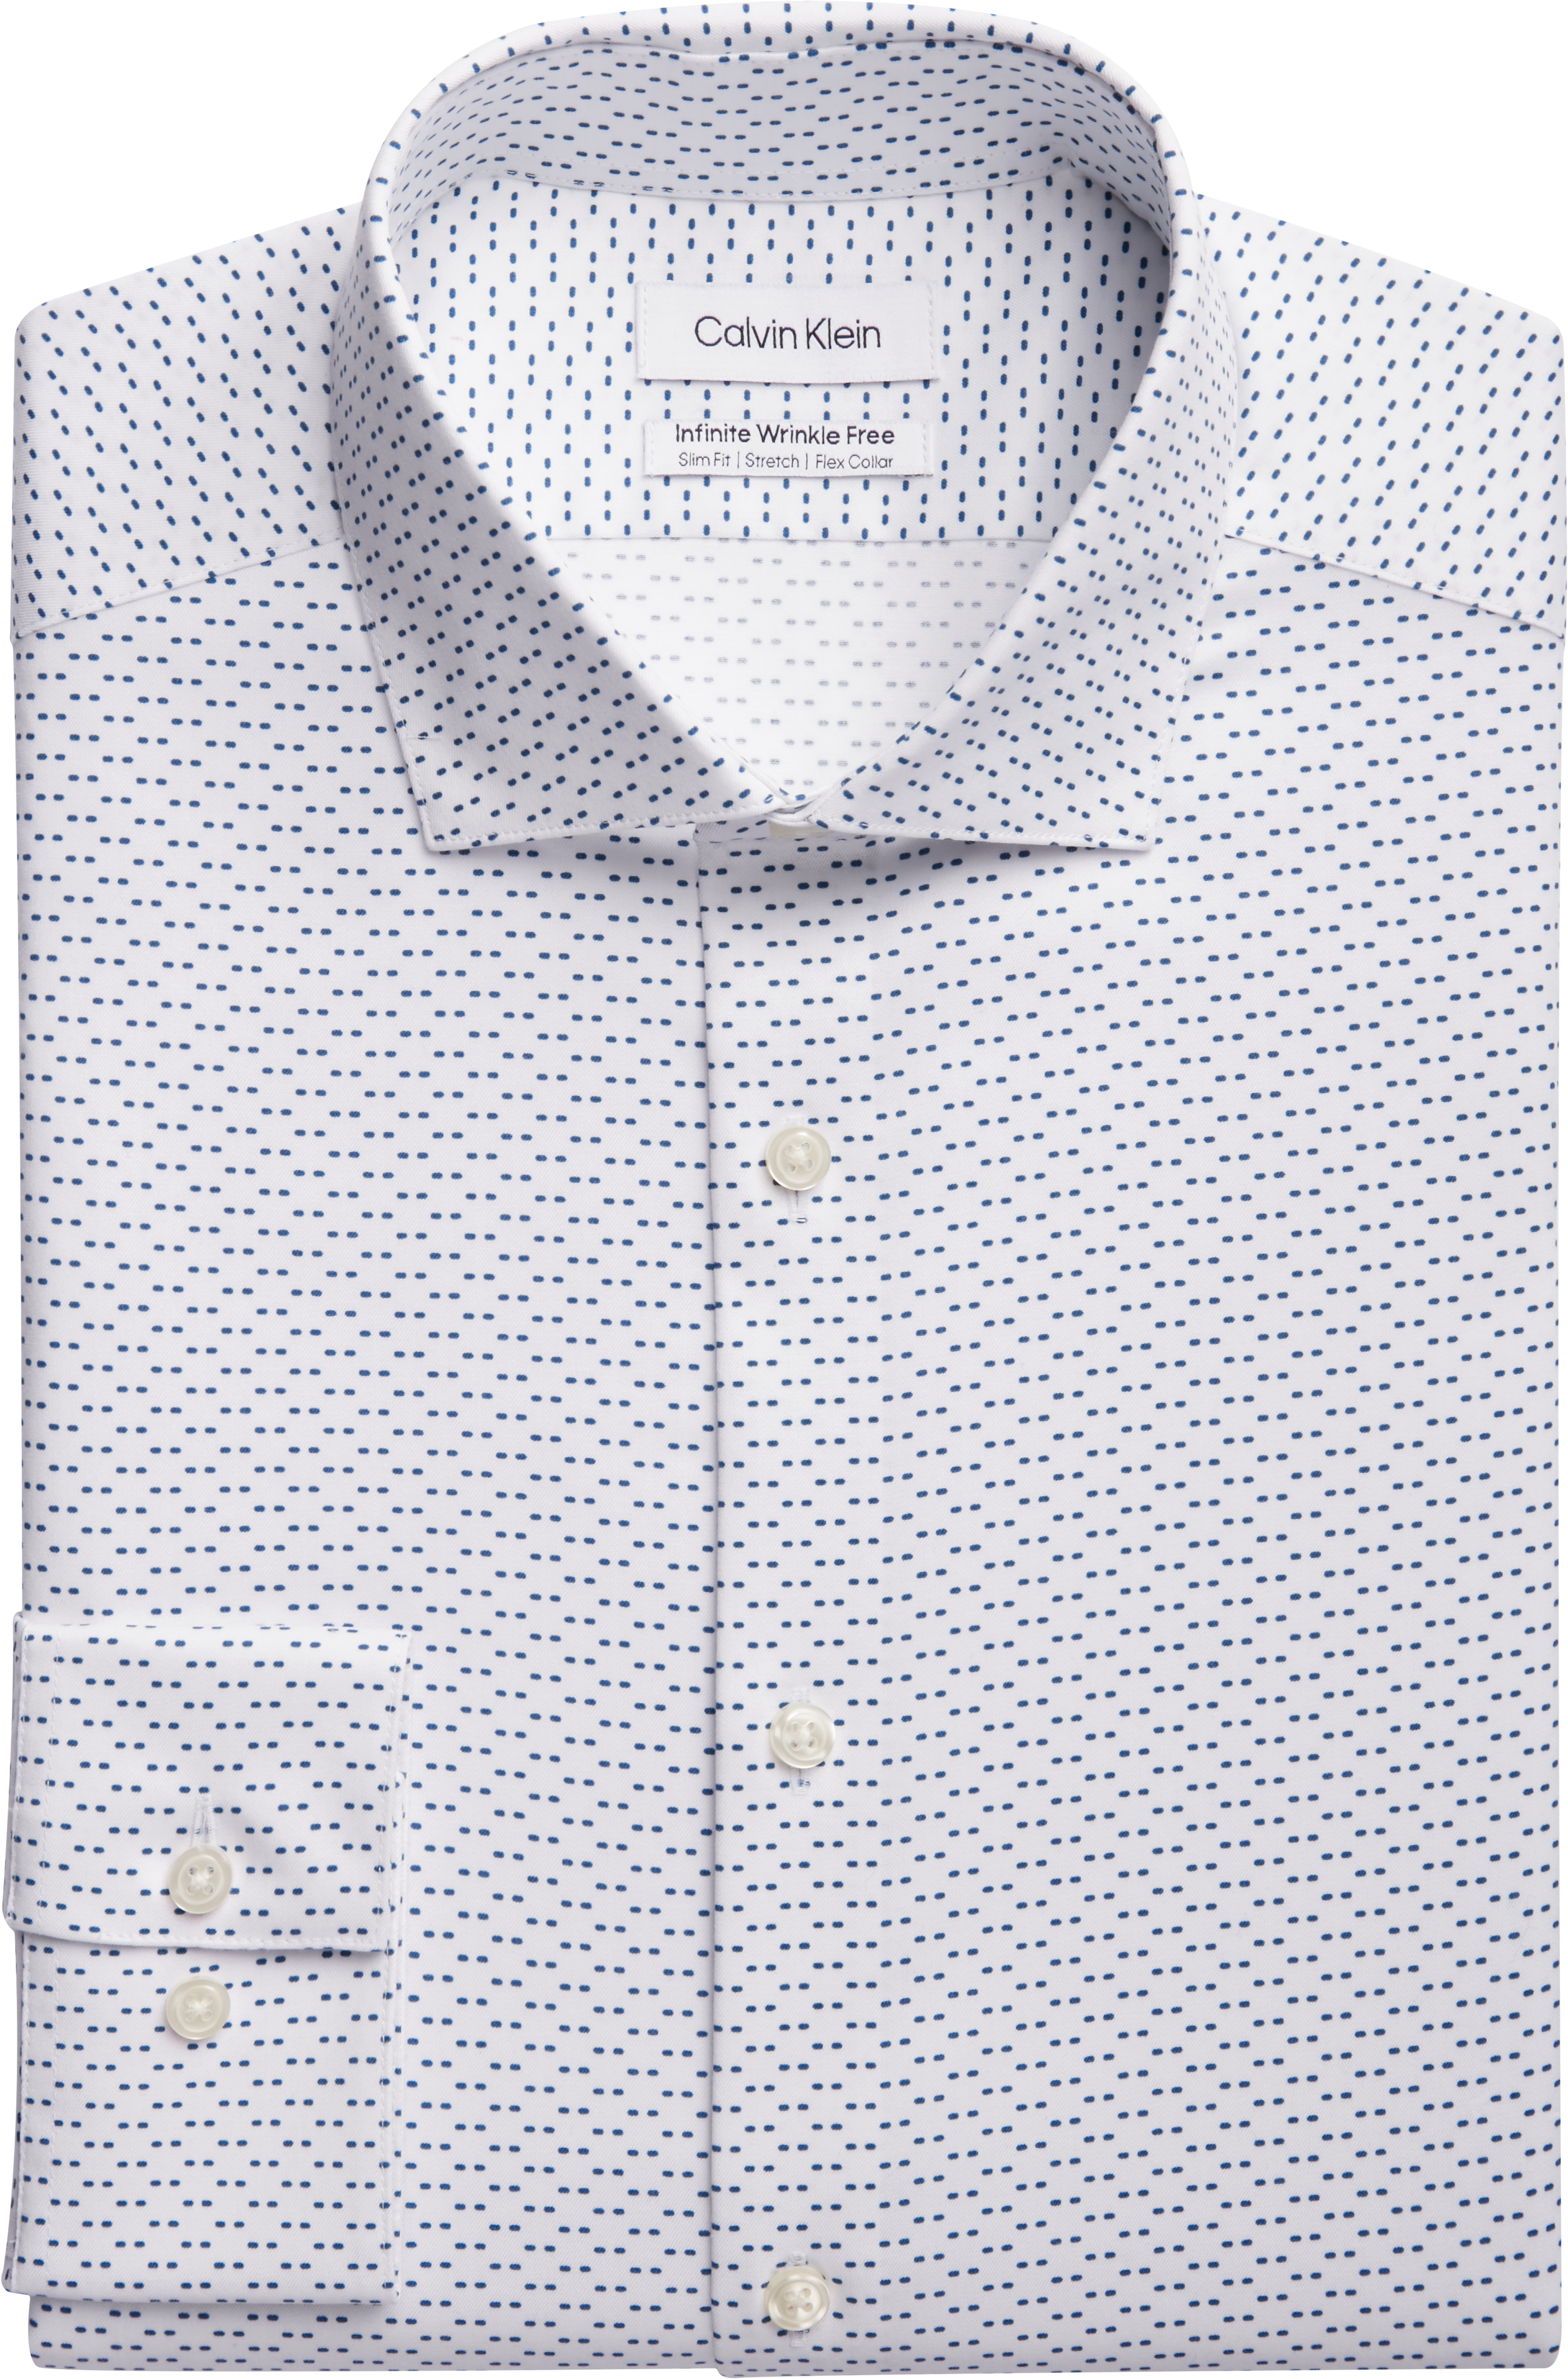 Calvin Klein Infinite Non-Iron Slim Fit Stretch Collar Dress Shirt, White  Navy Dot - Men's Sale | Men's Wearhouse